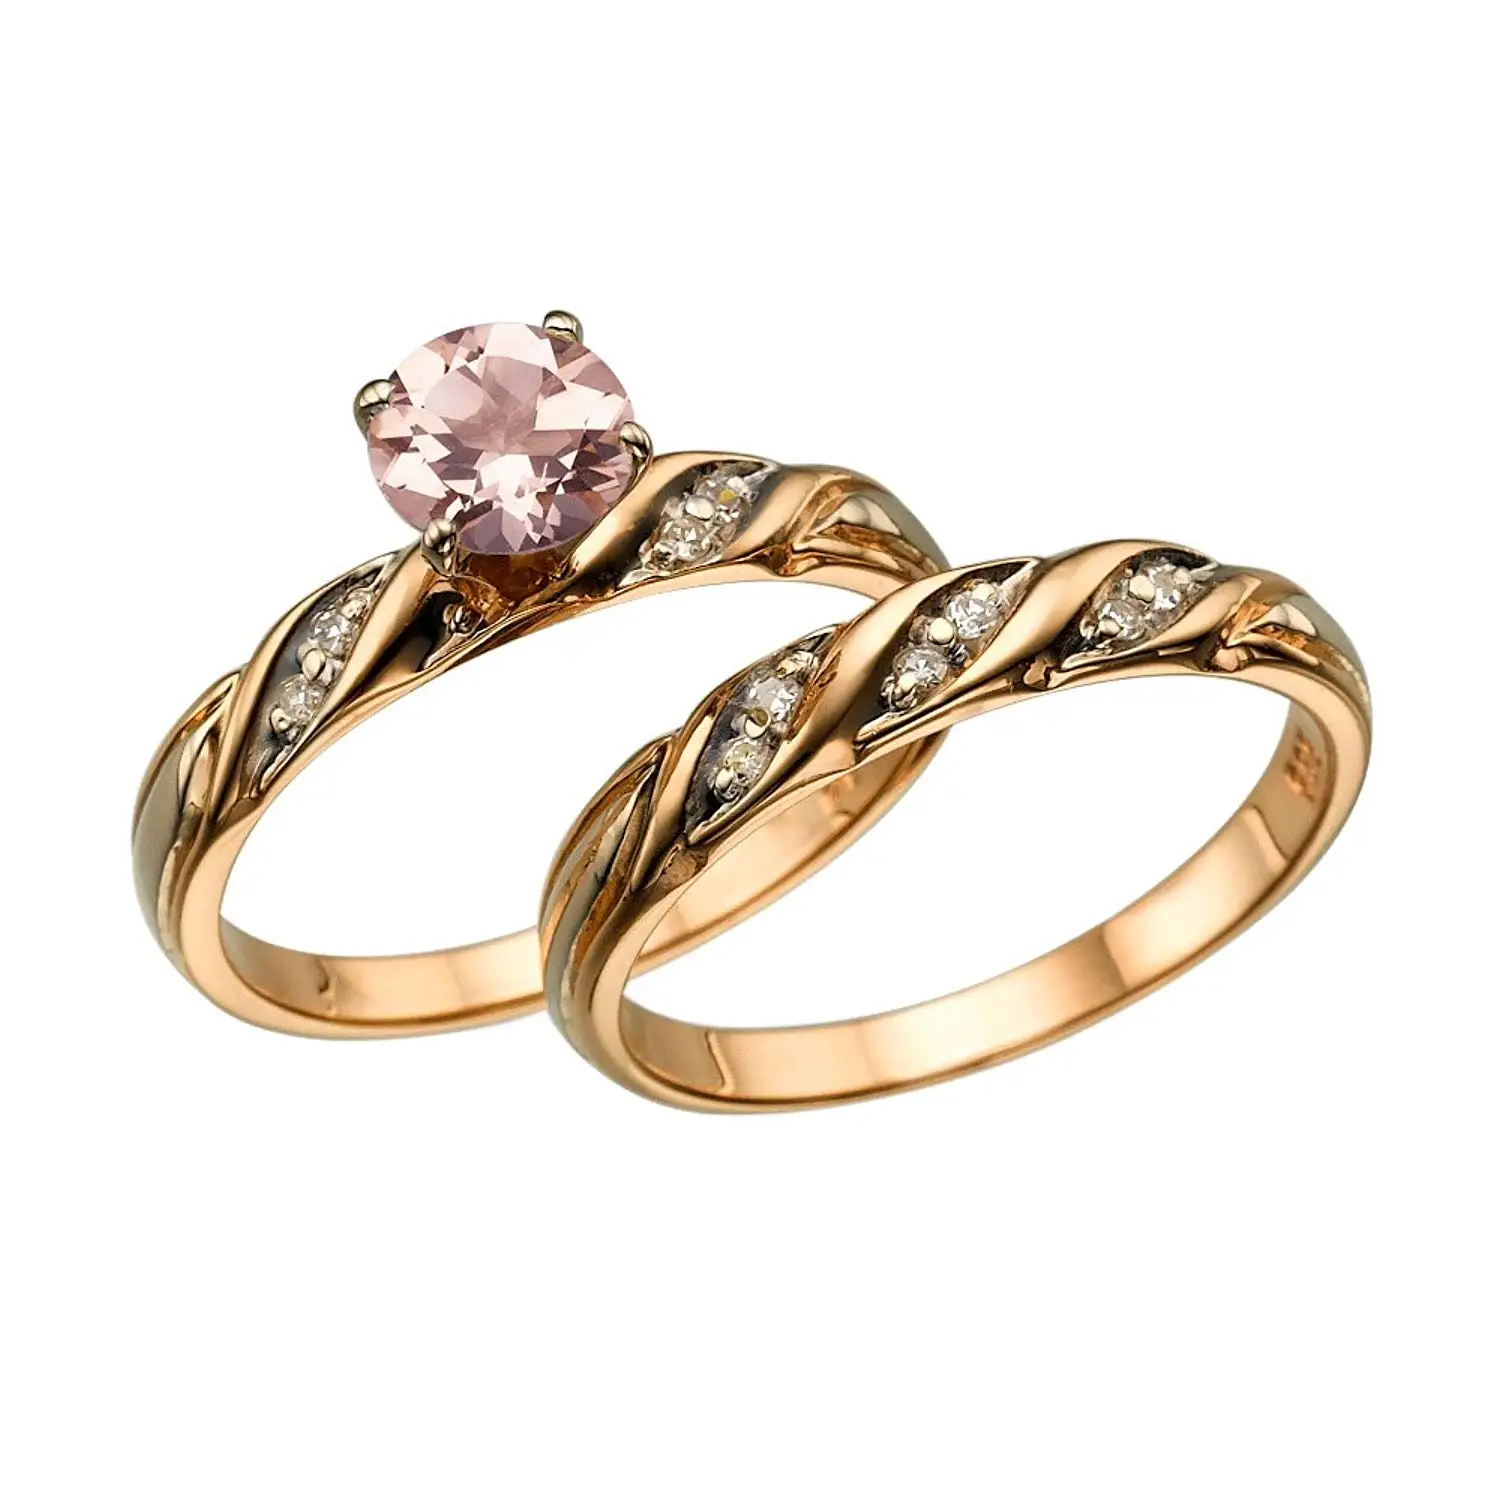 Cheap Pink Diamonds Wedding Rings Find Pink Diamonds Wedding Rings